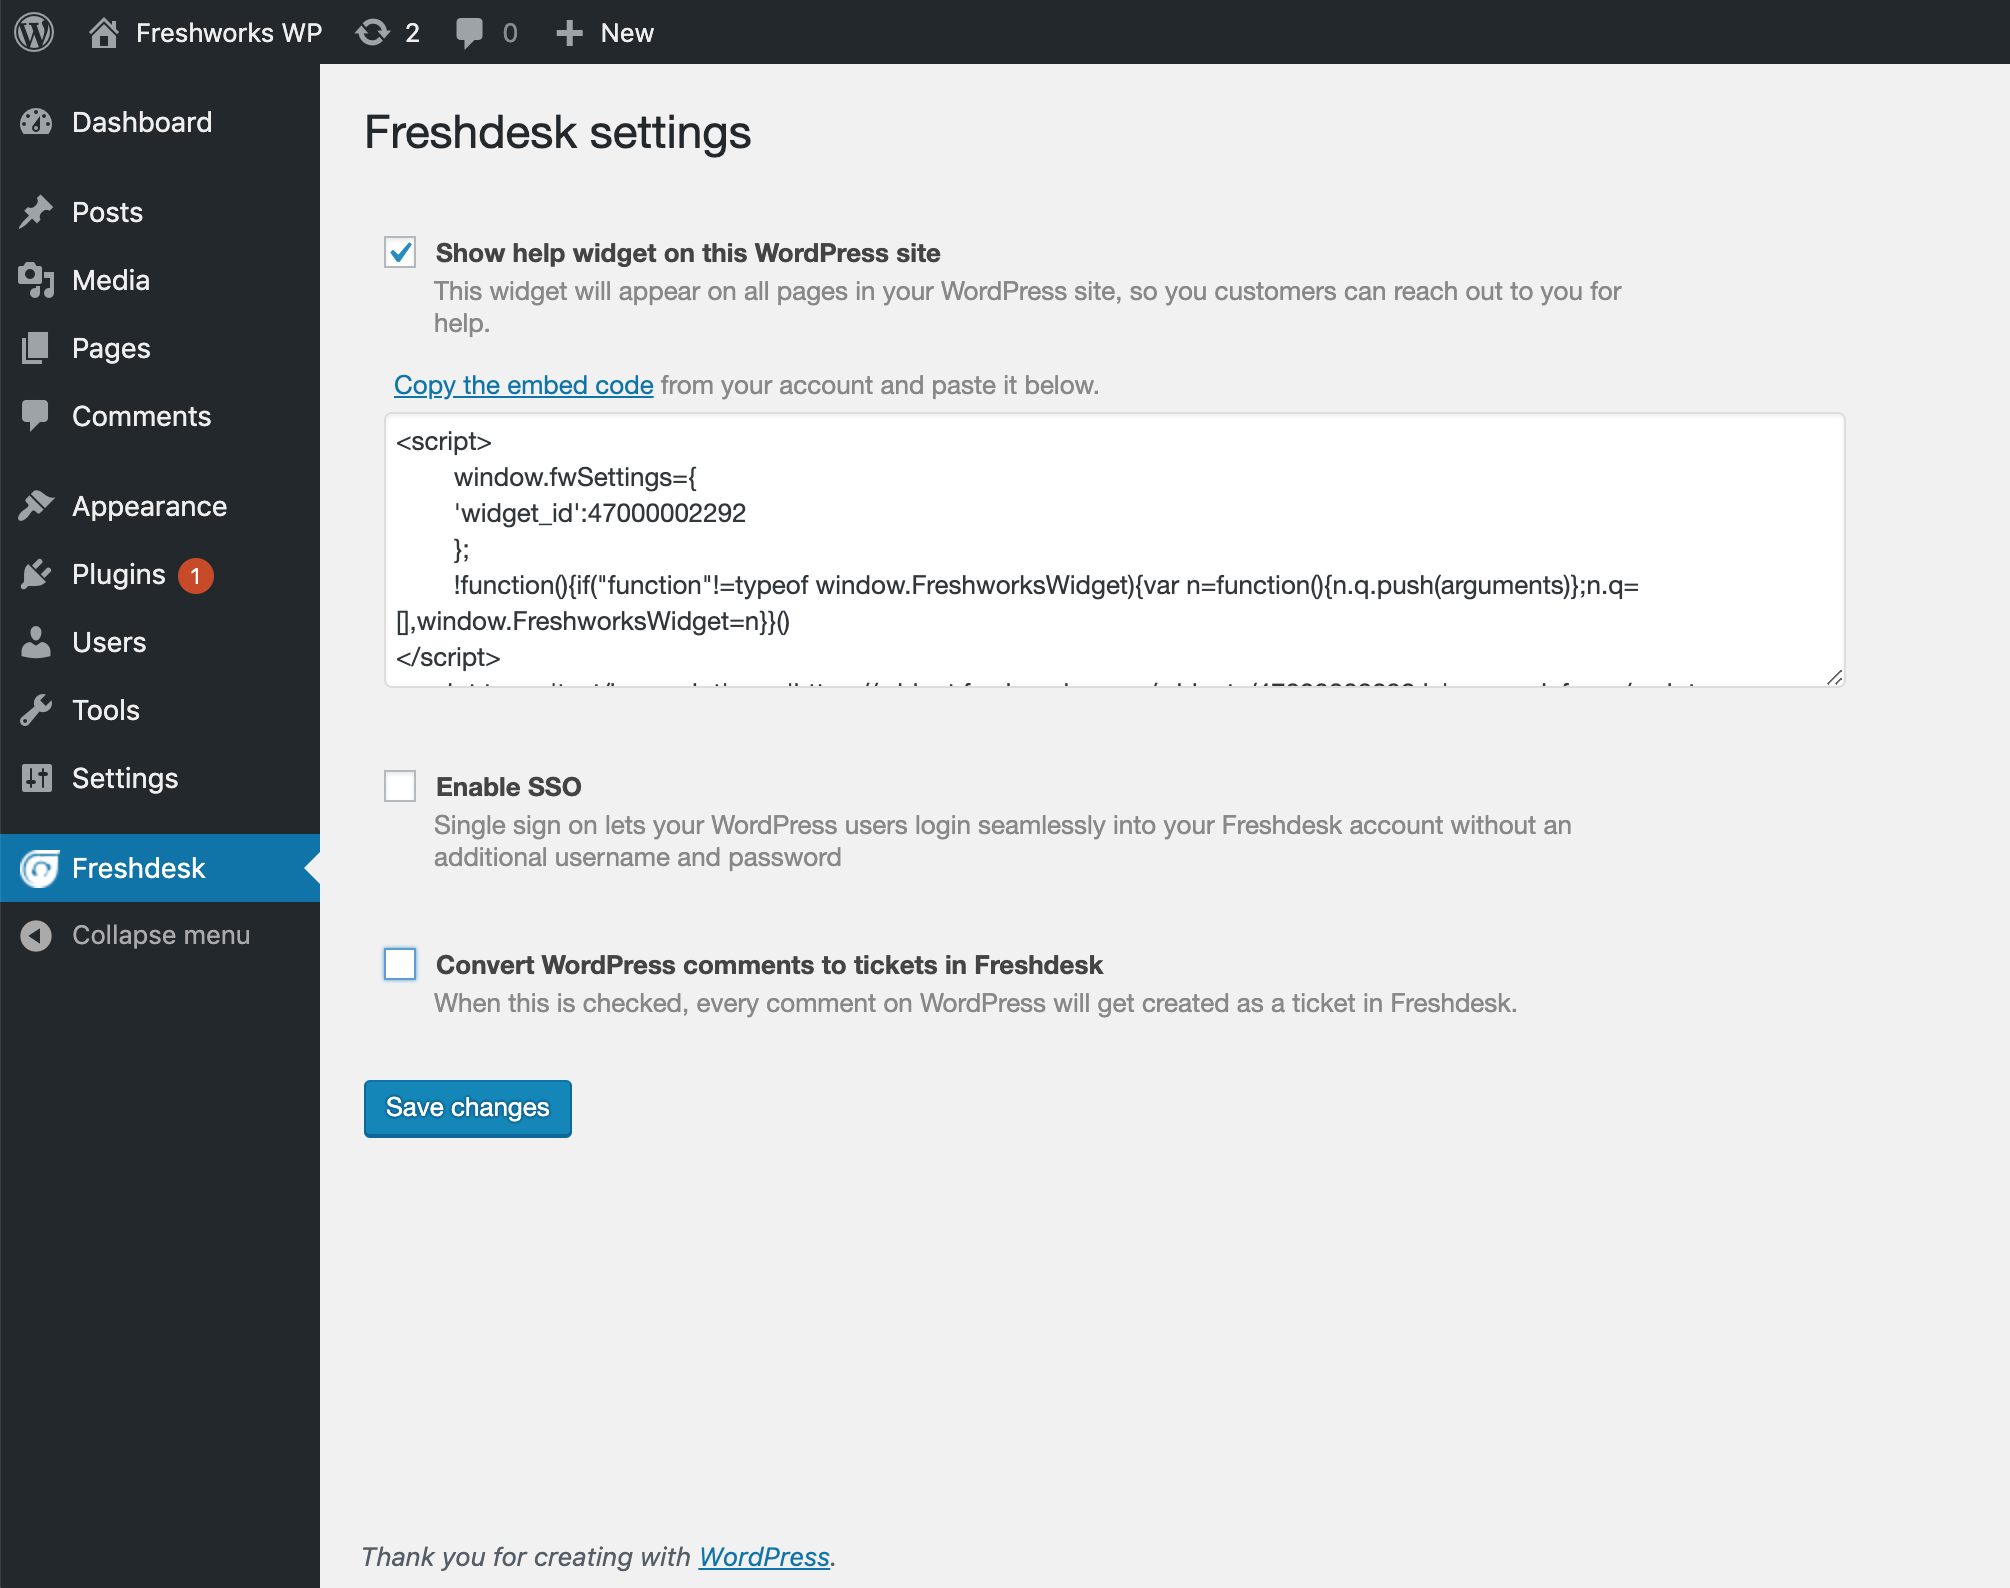 Freshdesk (official) plugin's settings page in WordPress